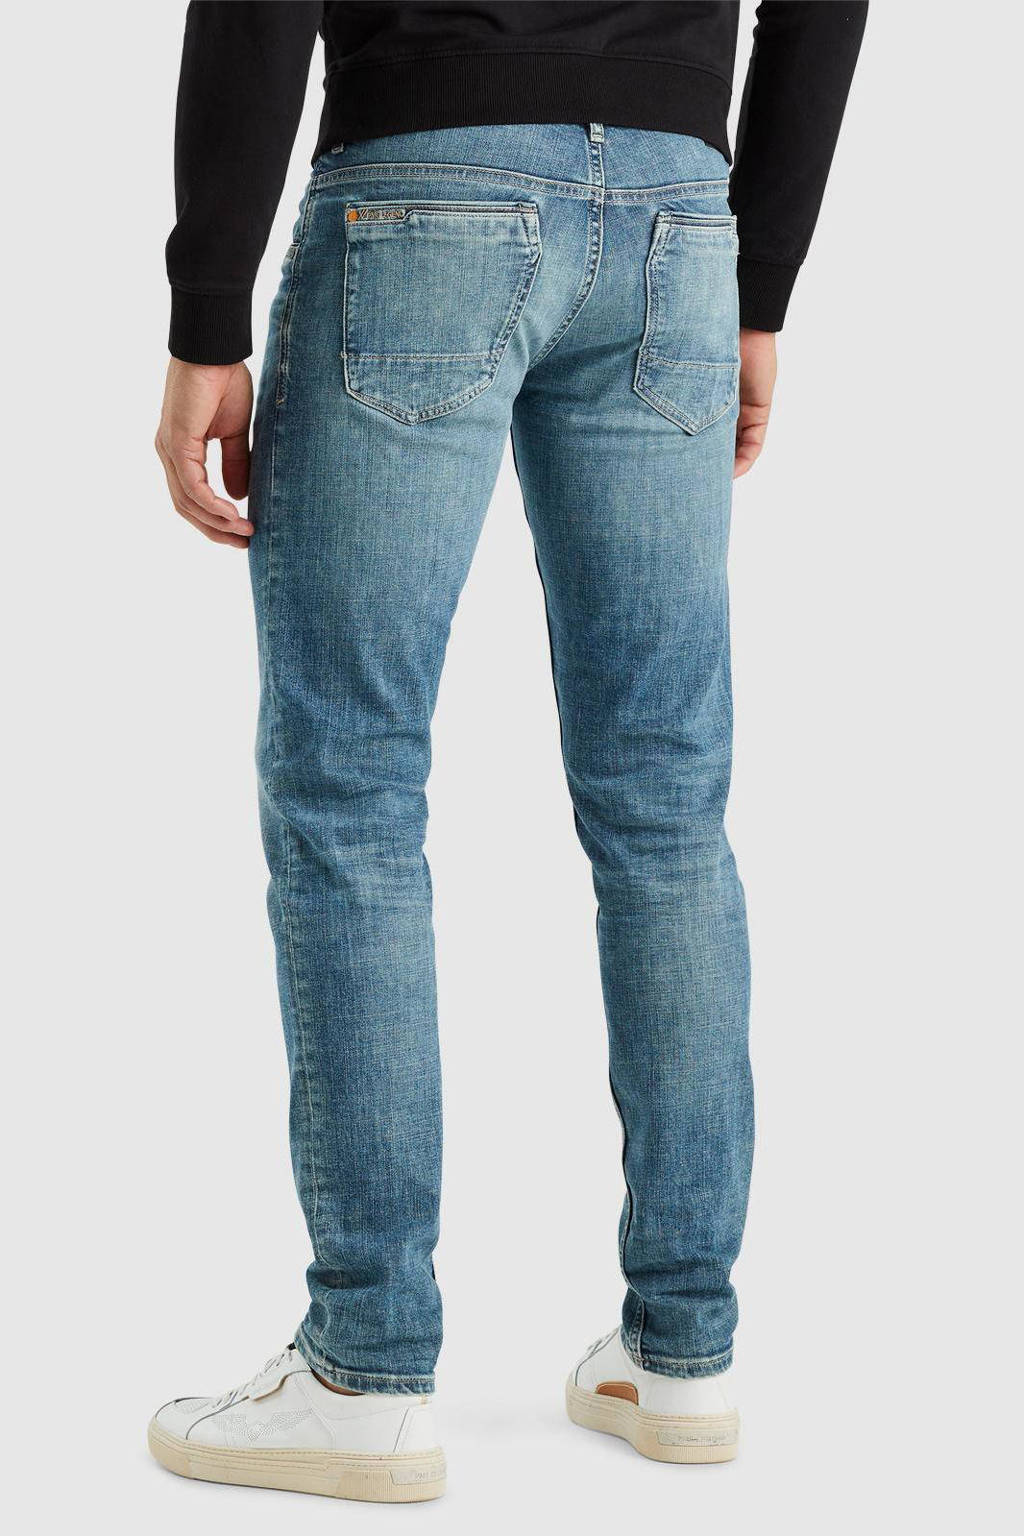 jeans bright wehkamp slim fit PME air Legend blue | XV DENIM